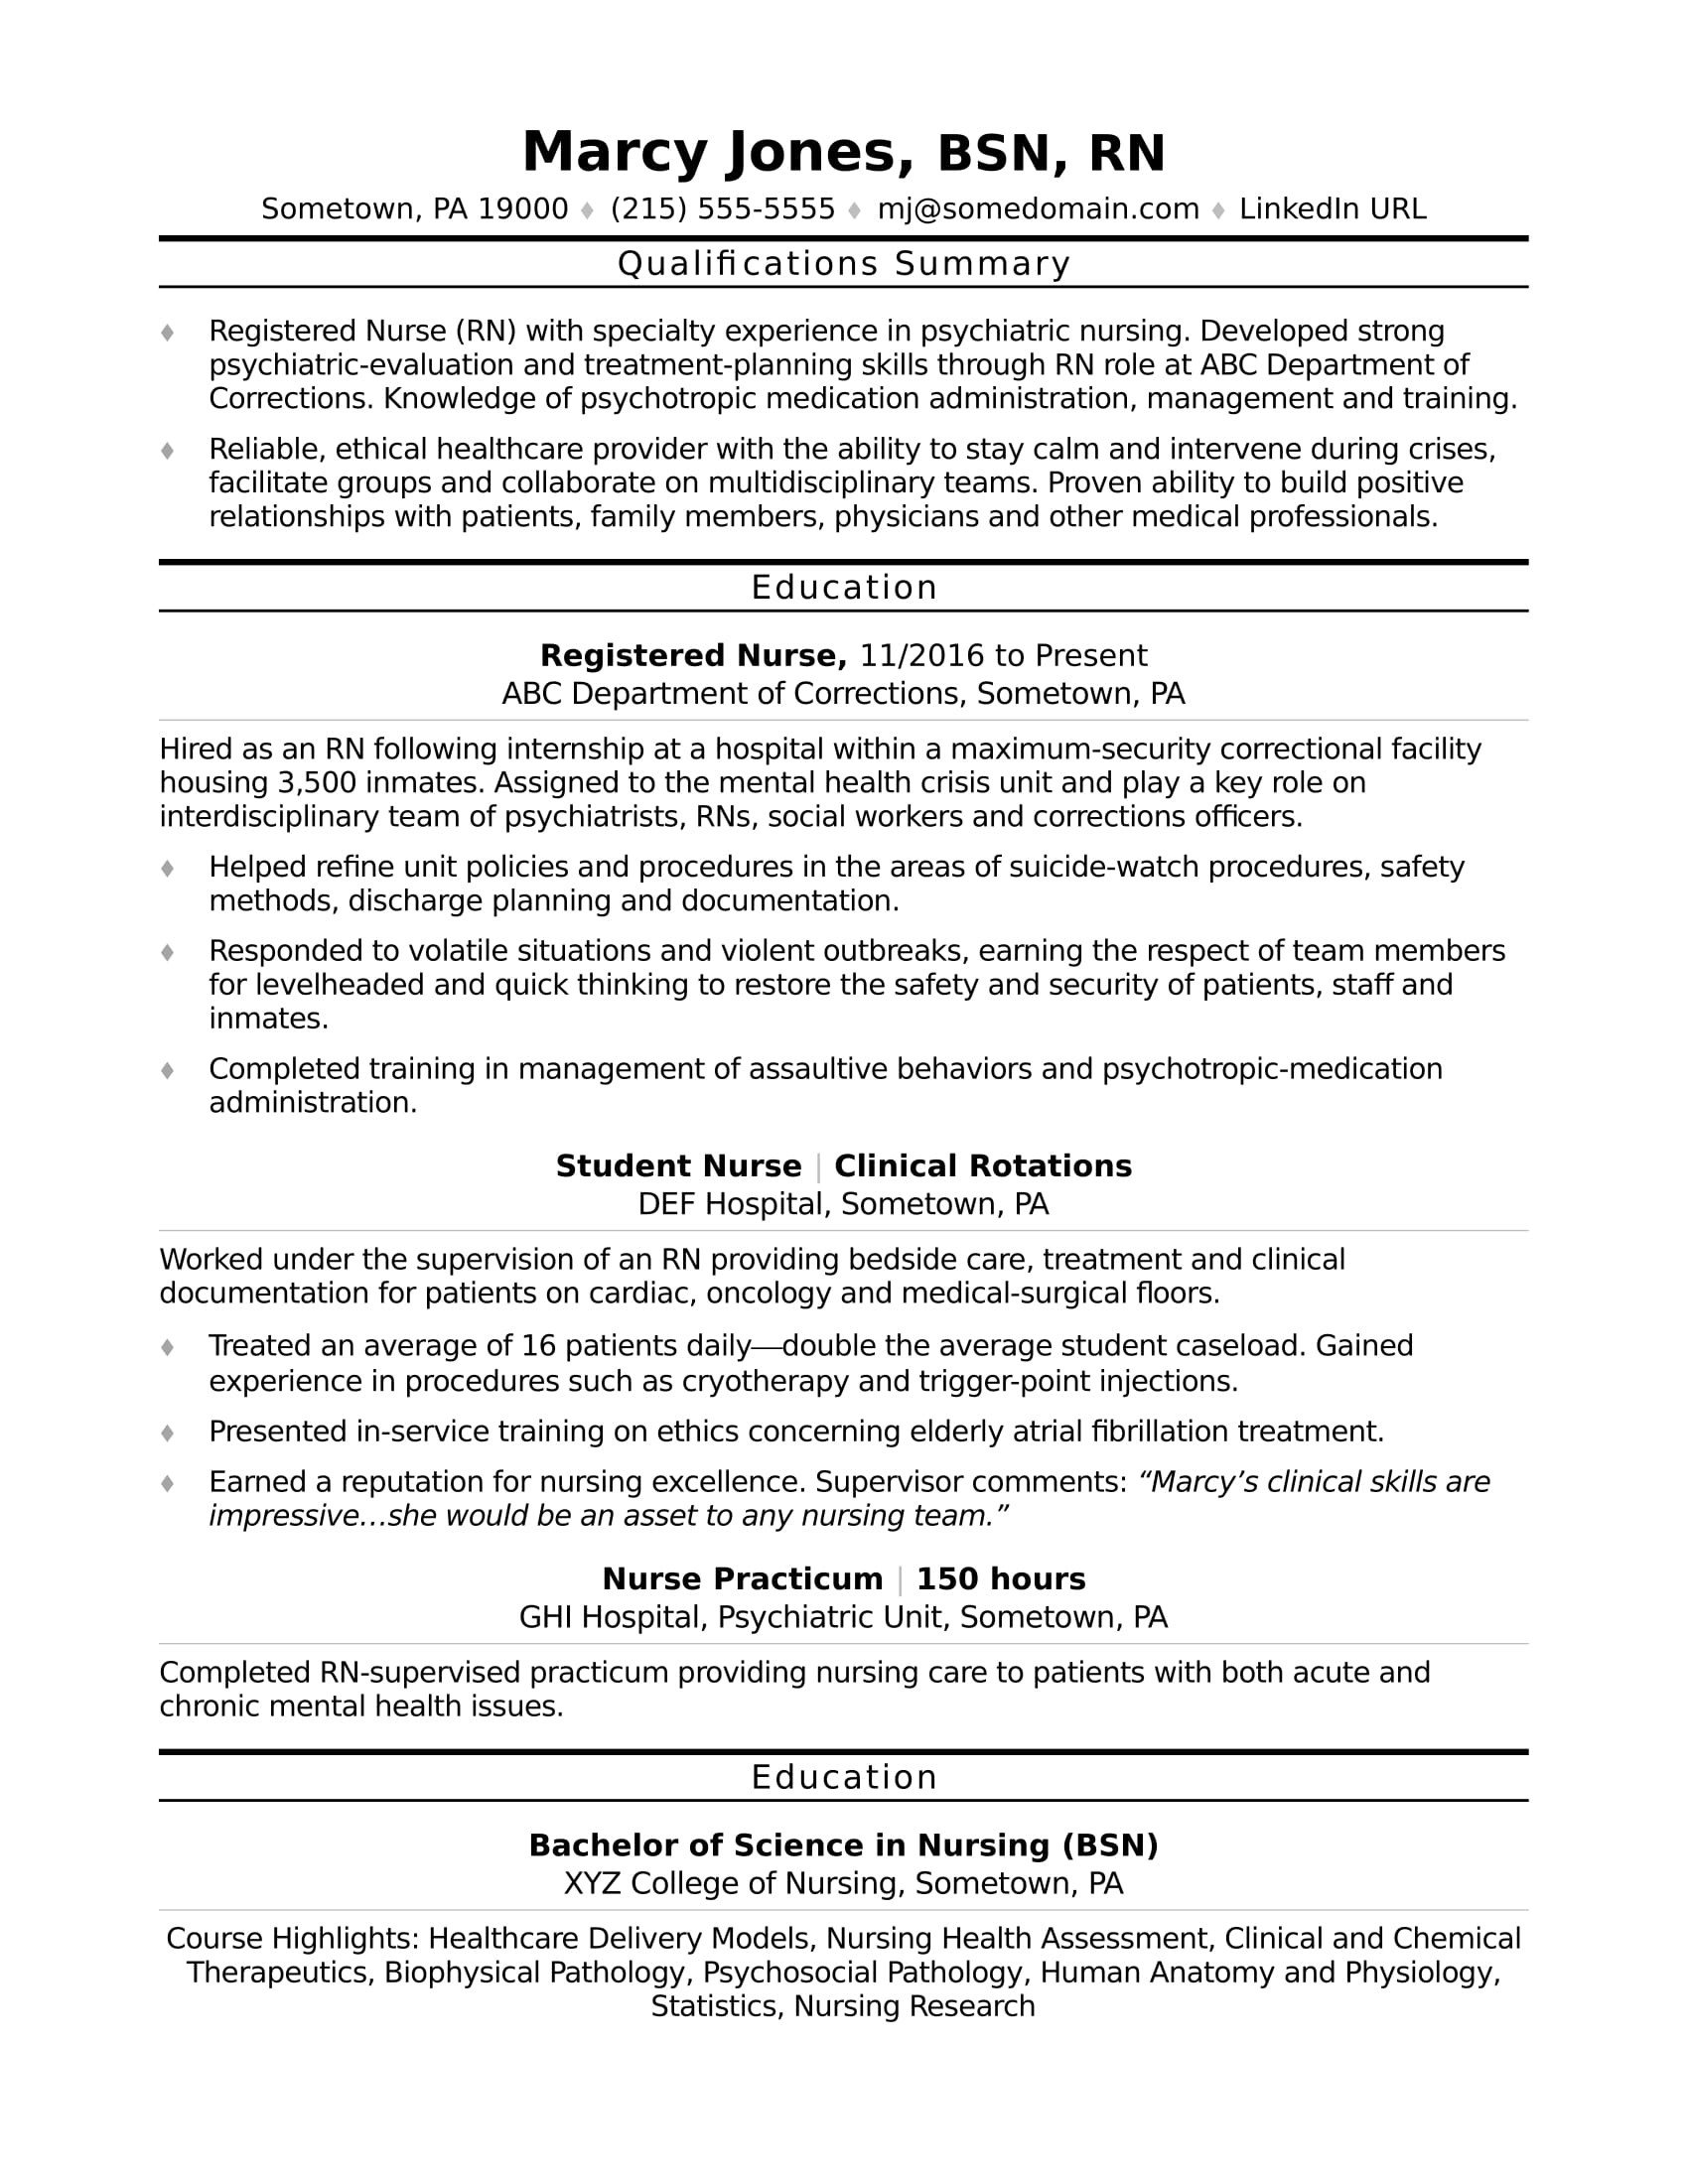 Sample Resume Objectives for Nursing Student Registered Nurse (rn) Resume Sample Monster.com